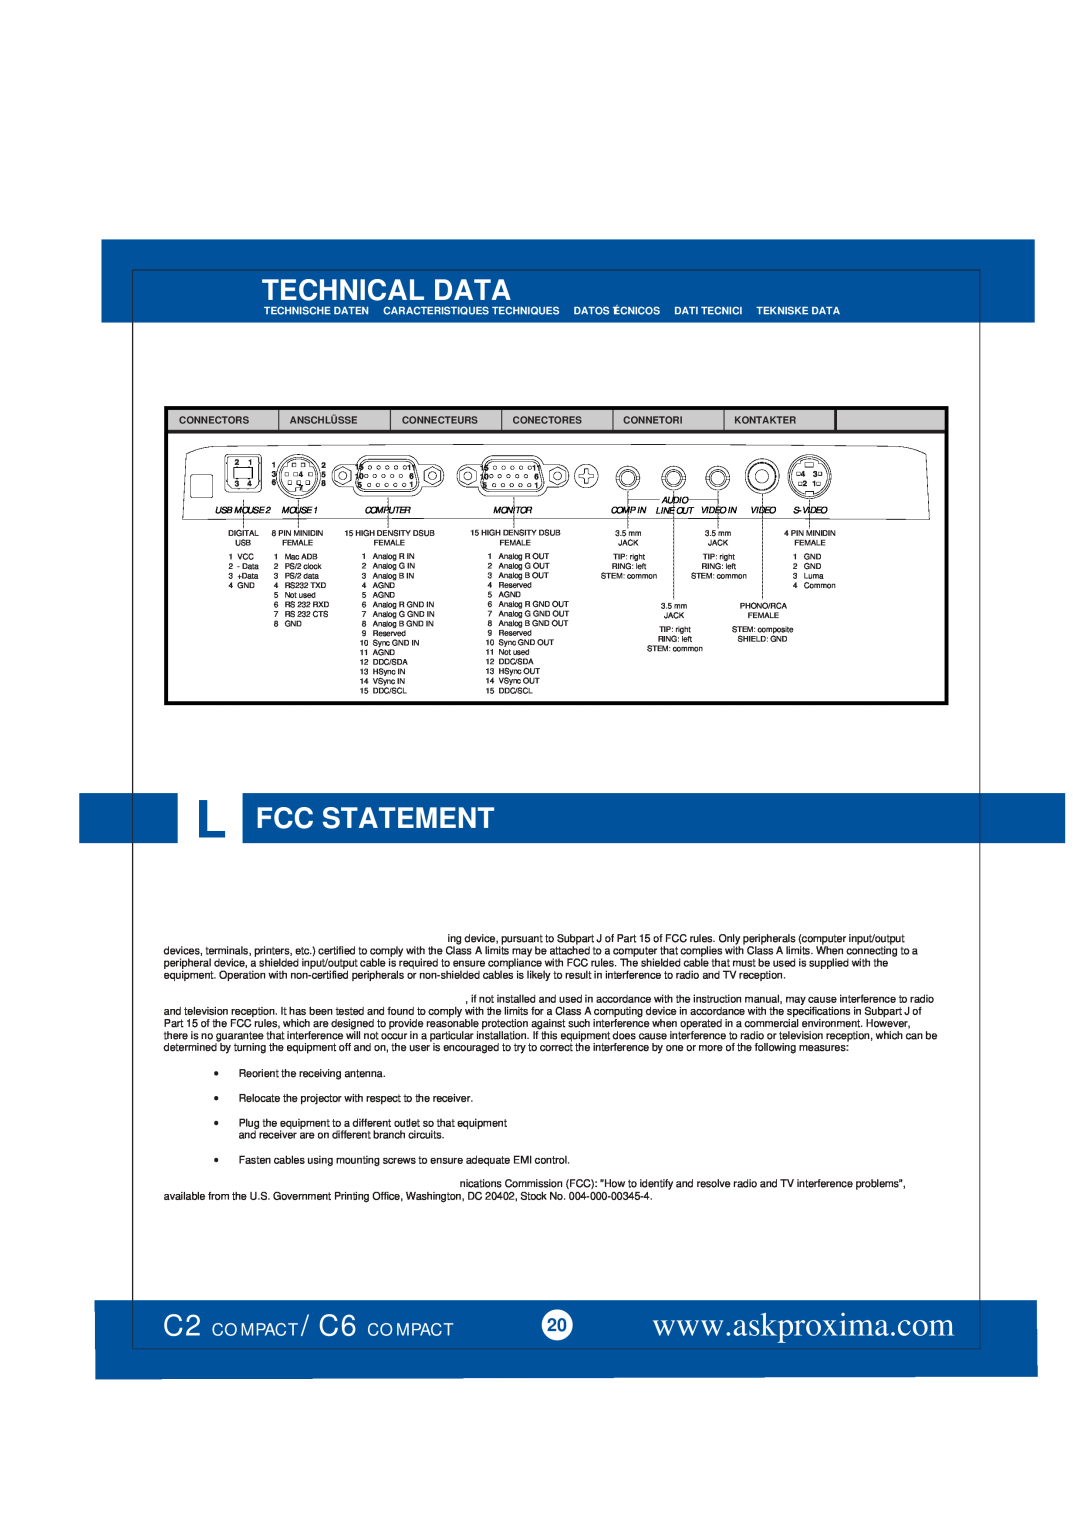 Ask Proxima manual L Fcc Statement, Technical Data, C2 COMPACT / C6 COMPACT 